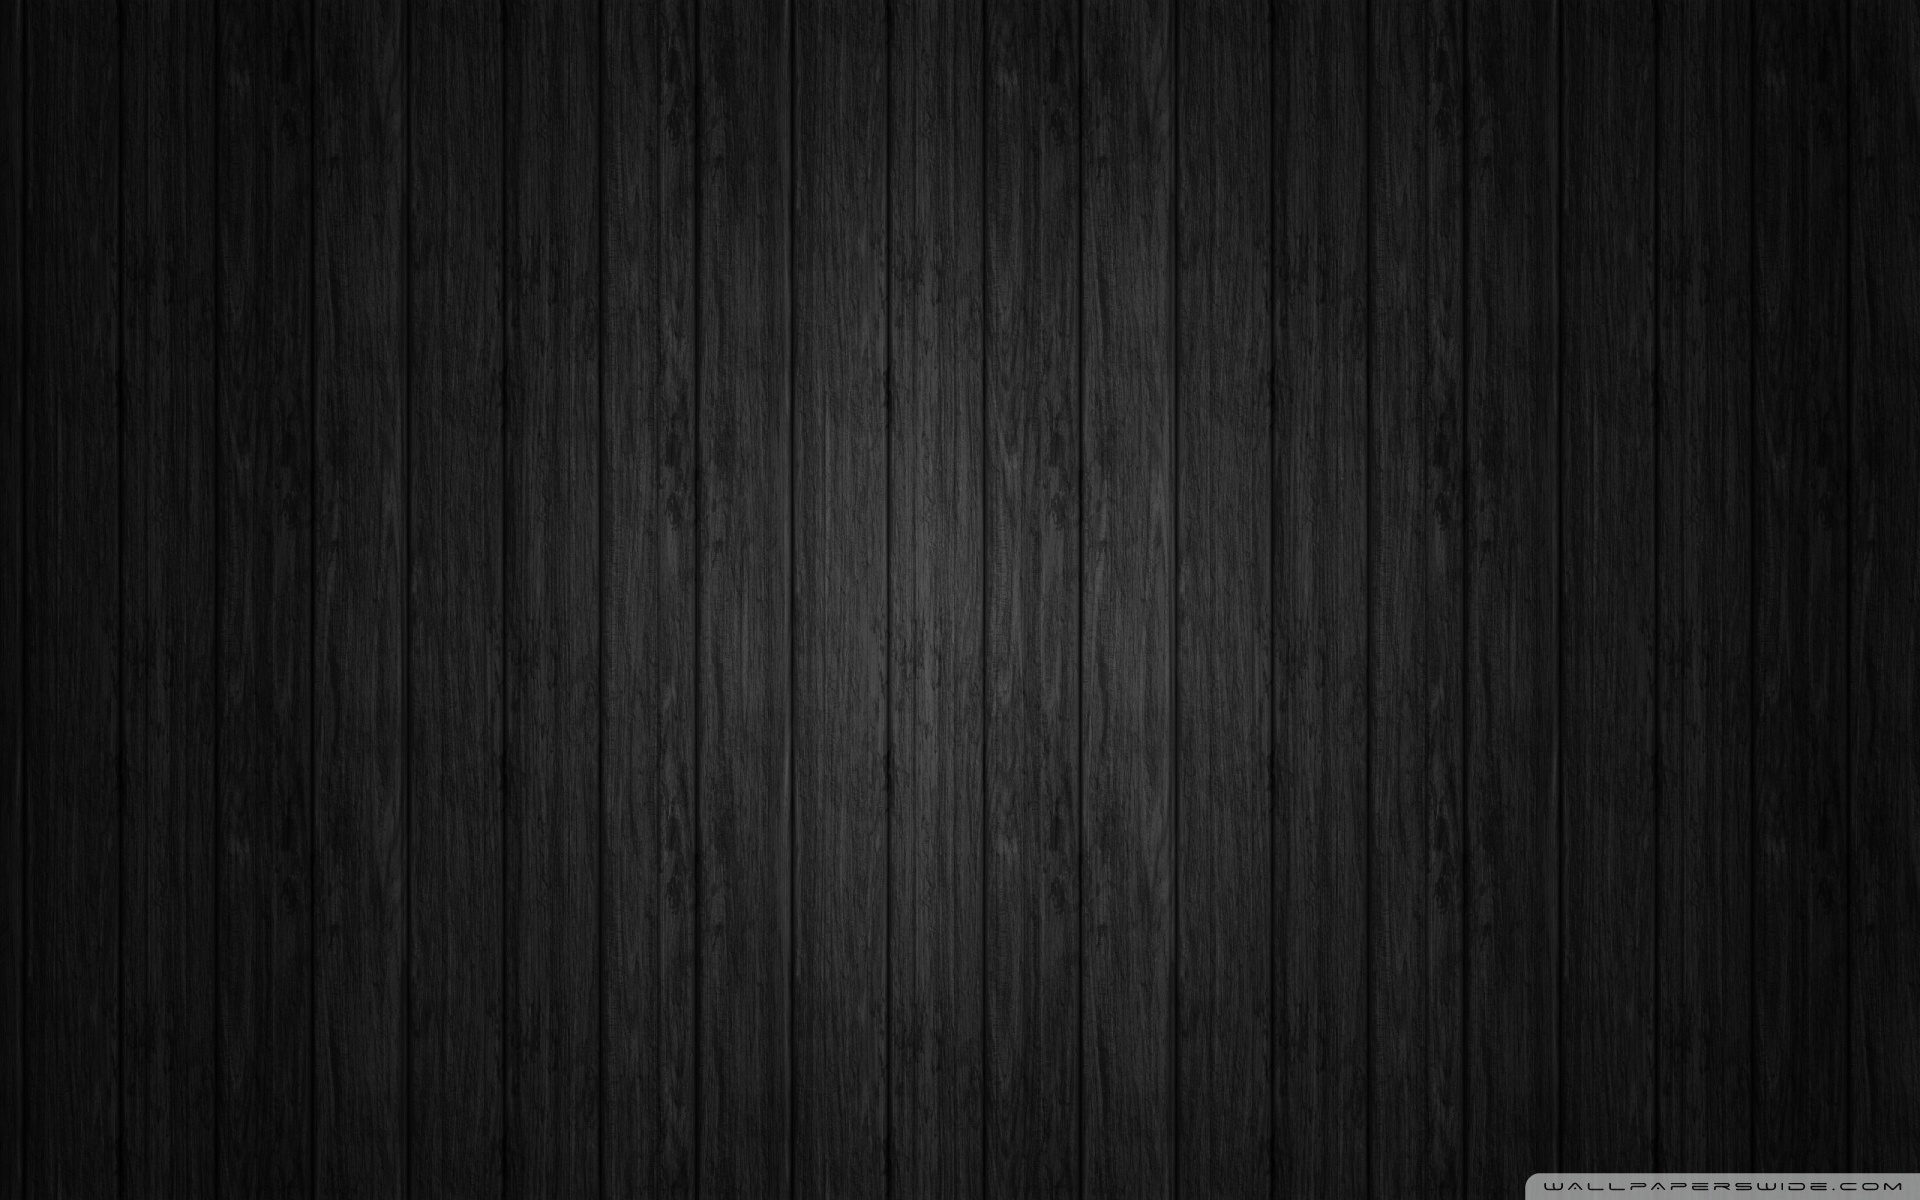 black background wood ❤ 4k hd desktop wallpaper for 4k ultra hd tv